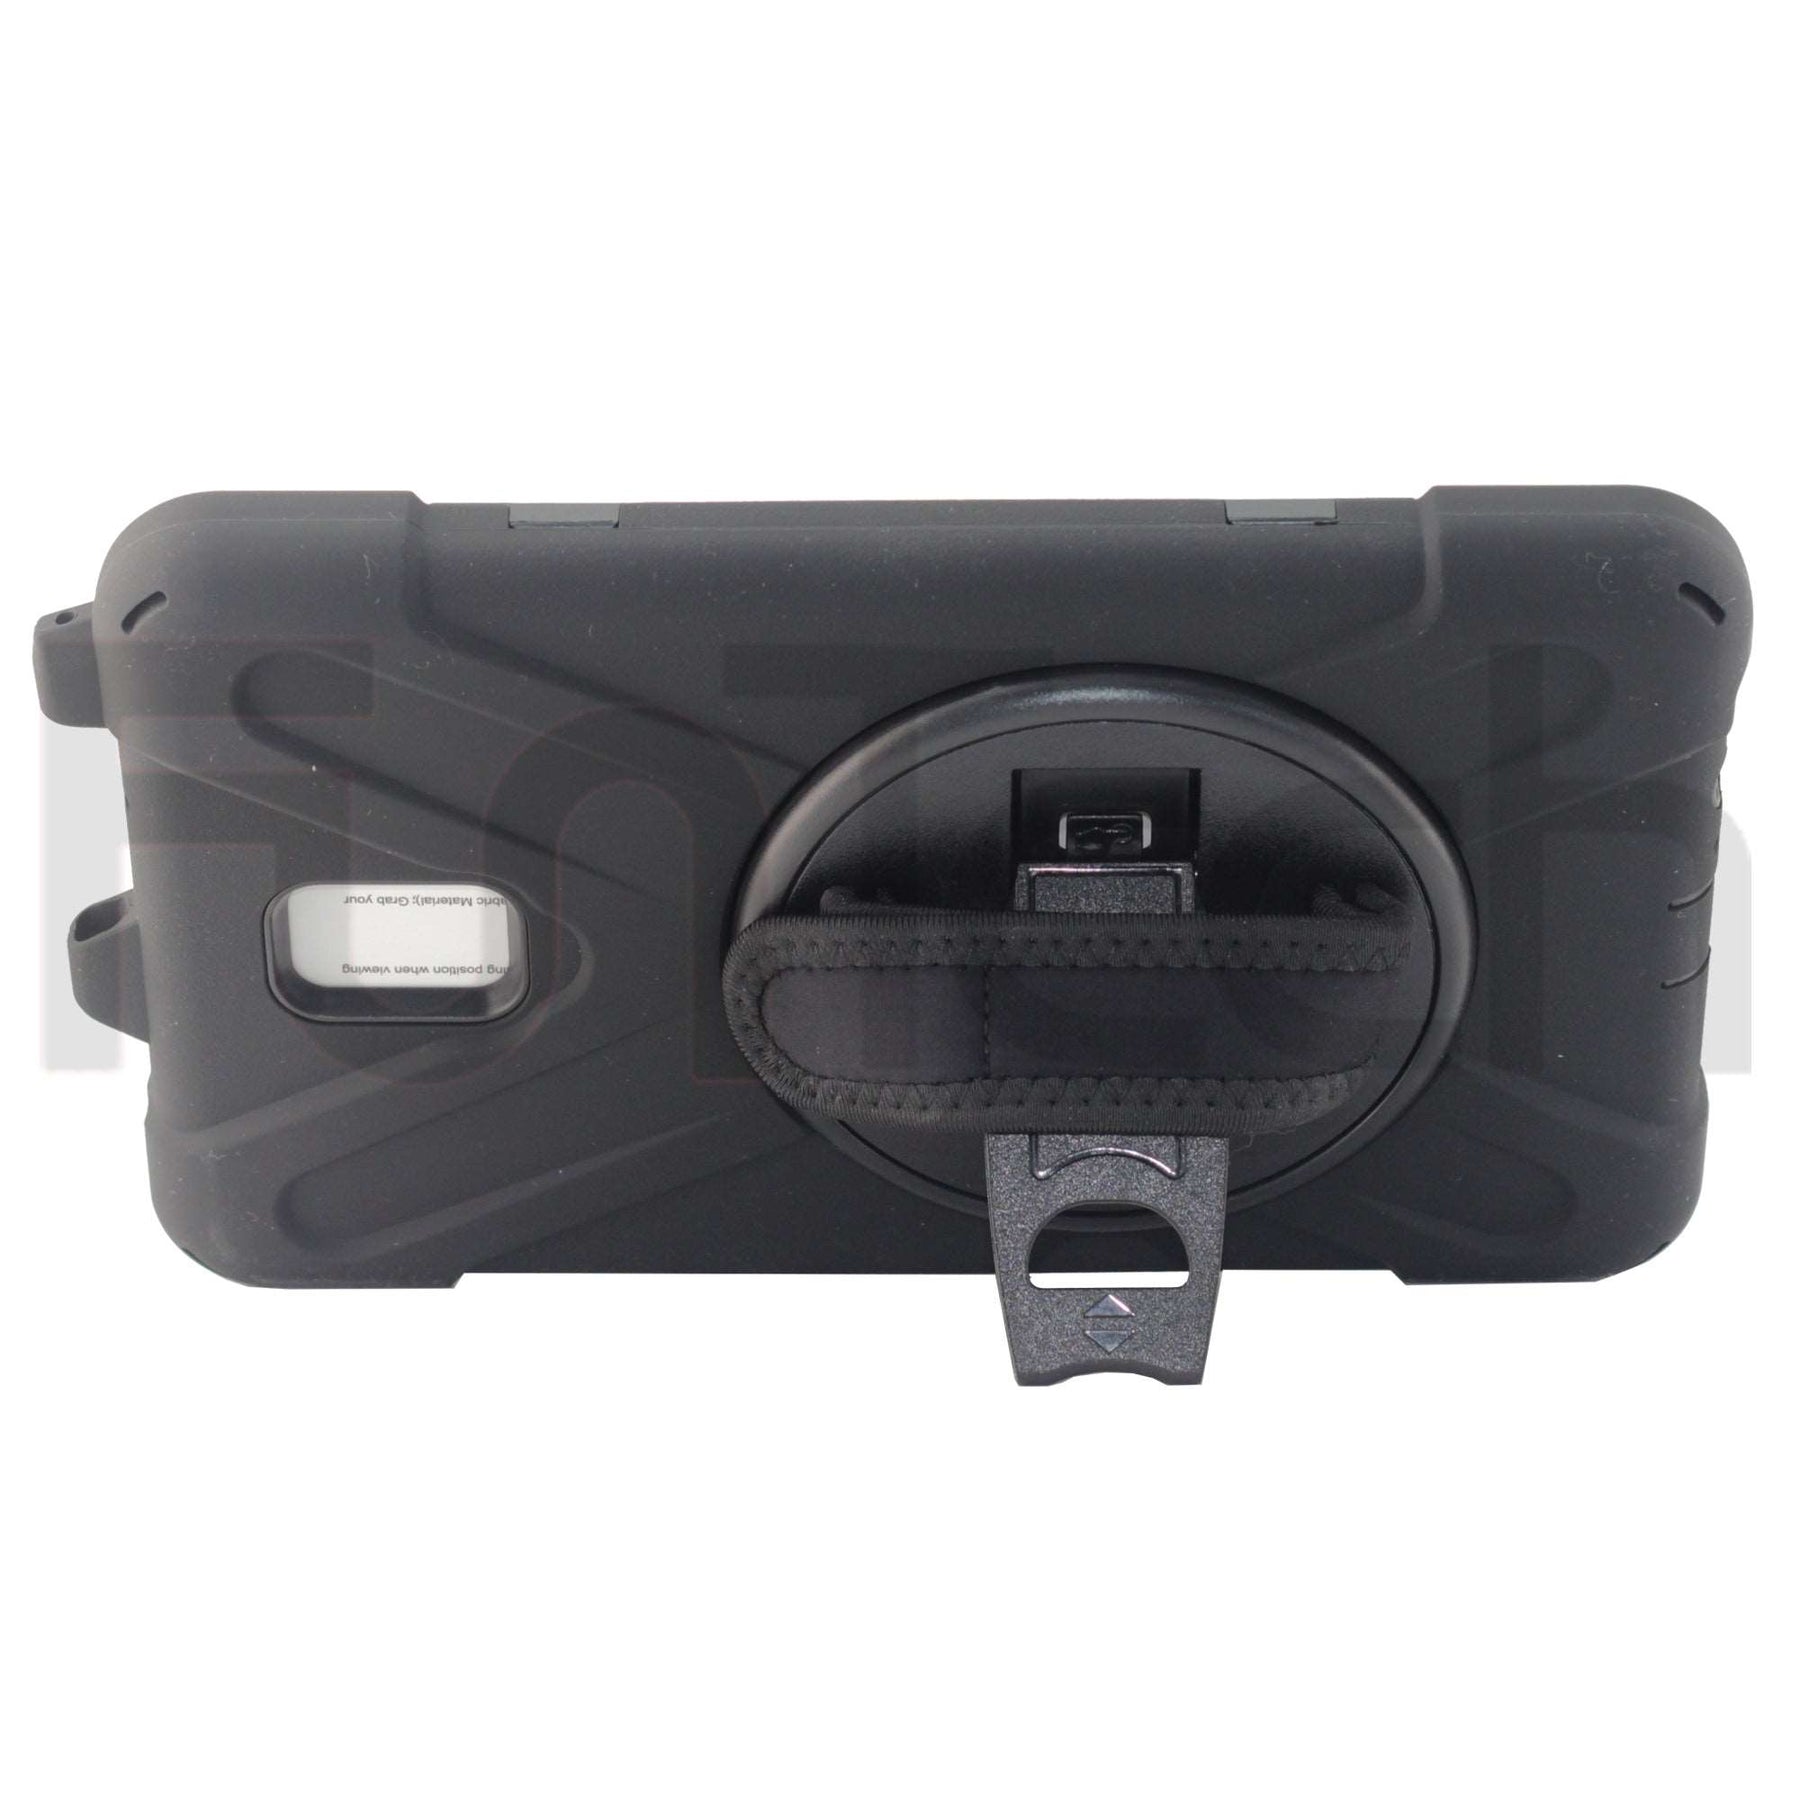 Drop & Shock Proof Samsung Tab Case For - Active 2, T390/T395, Color Black